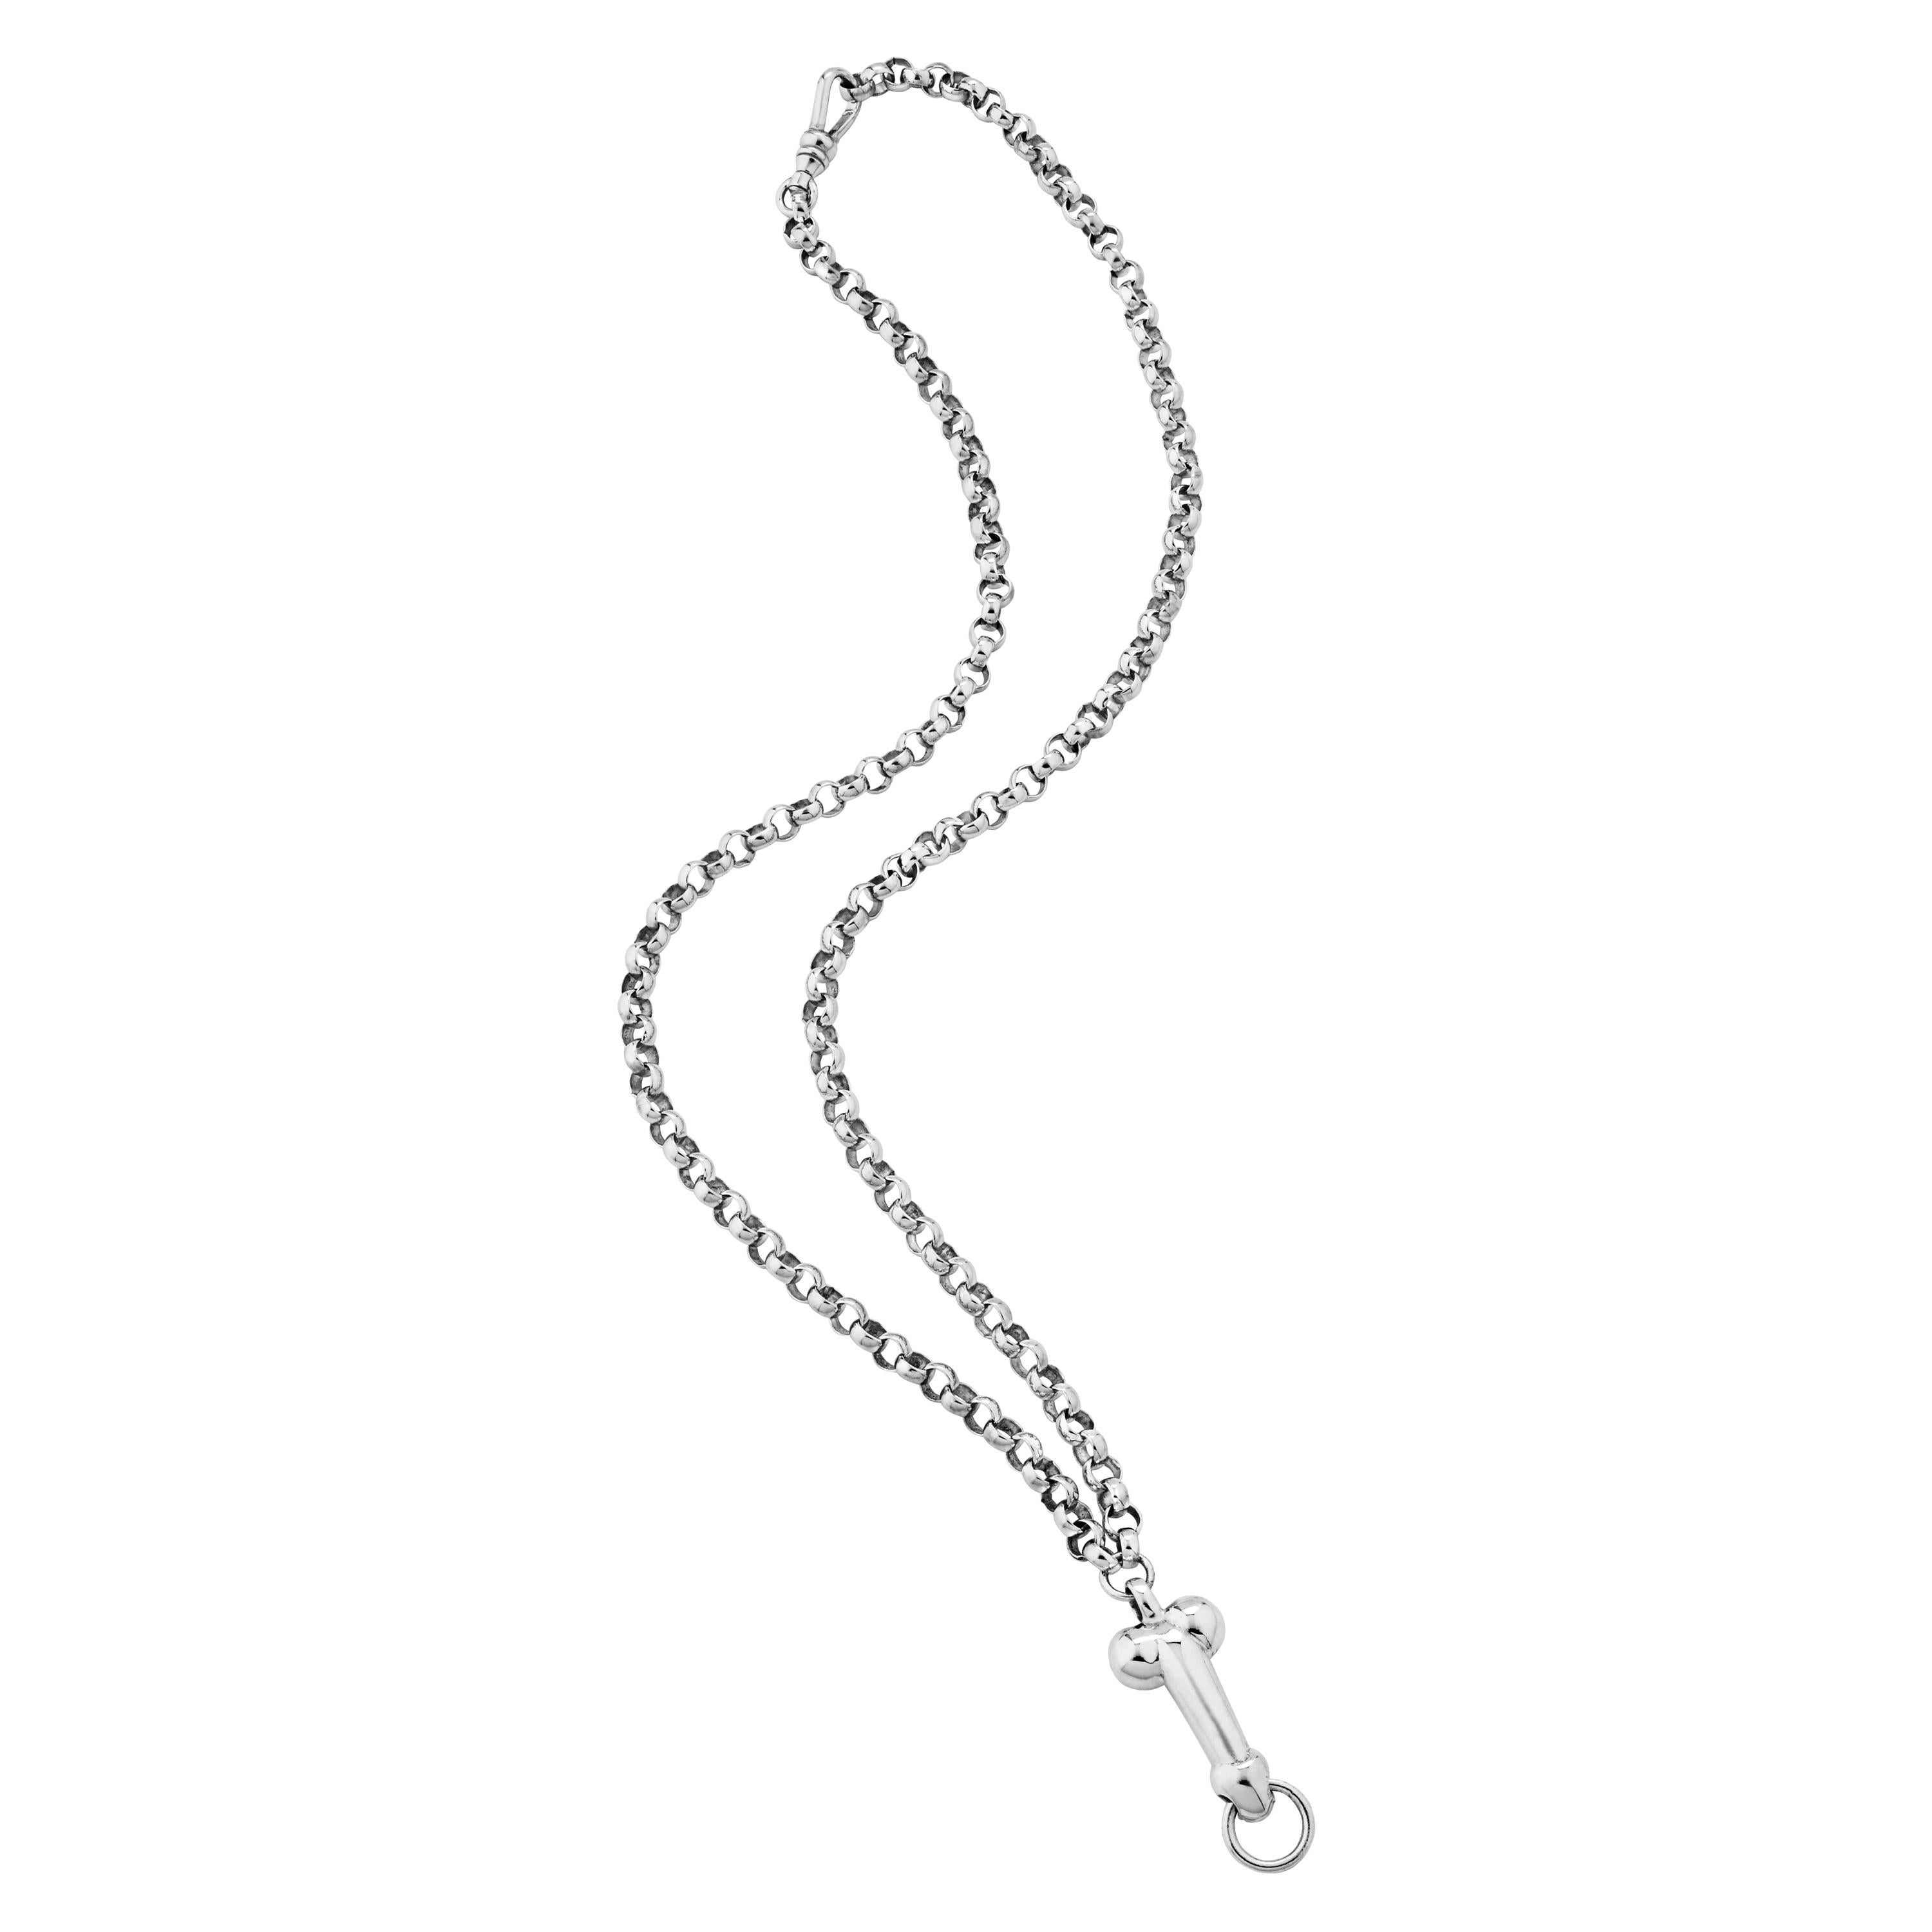 Betony Vernon "Pierced Pendant" Necklace Sterling Silver 925 in Stock